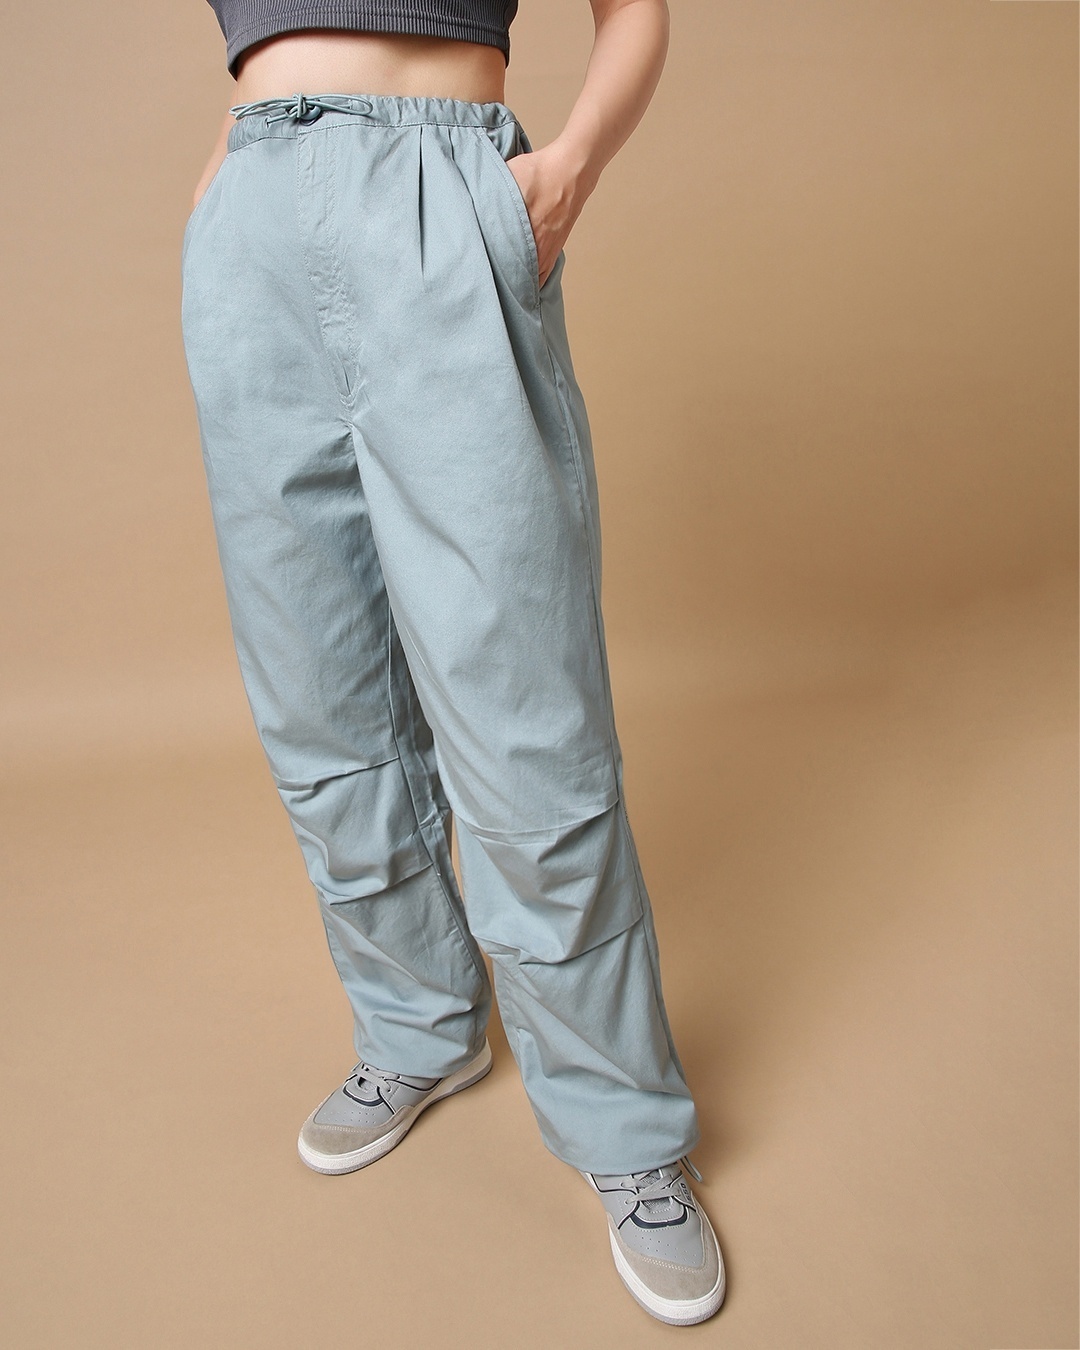 Women's Gray Pants + FREE SHIPPING | Clothing | Zappos.com